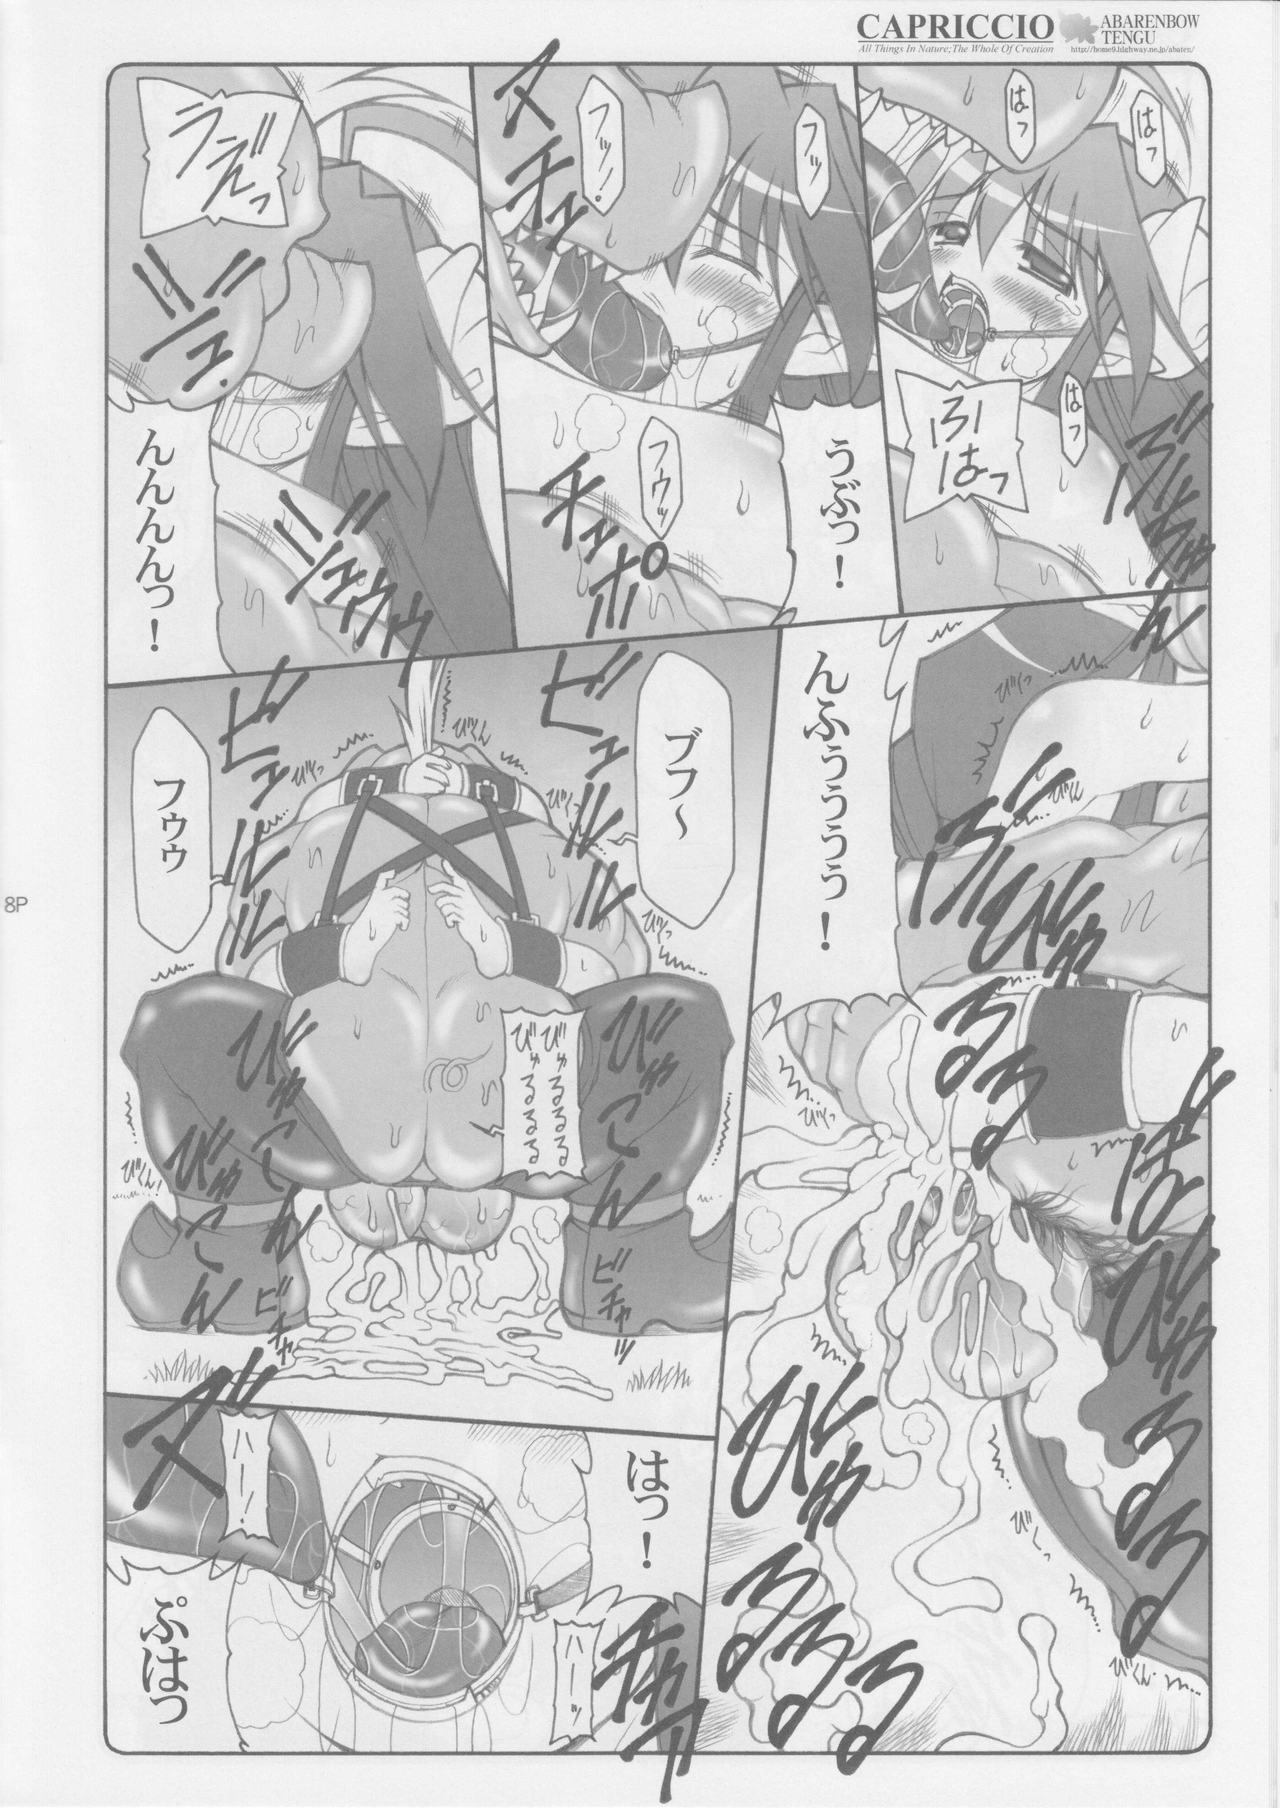 (Comic Castle 2005) [Abarenbow Tengu (Izumi Yuujiro, Daitengu Iori)] CAPRICCIO Kimagure shi vol.1 (Shinrabanshou Choco) (コミックキャッスル2005) [暴れん坊天狗 (泉ゆうじろー, 大天狗庵)] CAPRICCIO 気まぐれ誌 vol.1 (神羅万象チョコ)